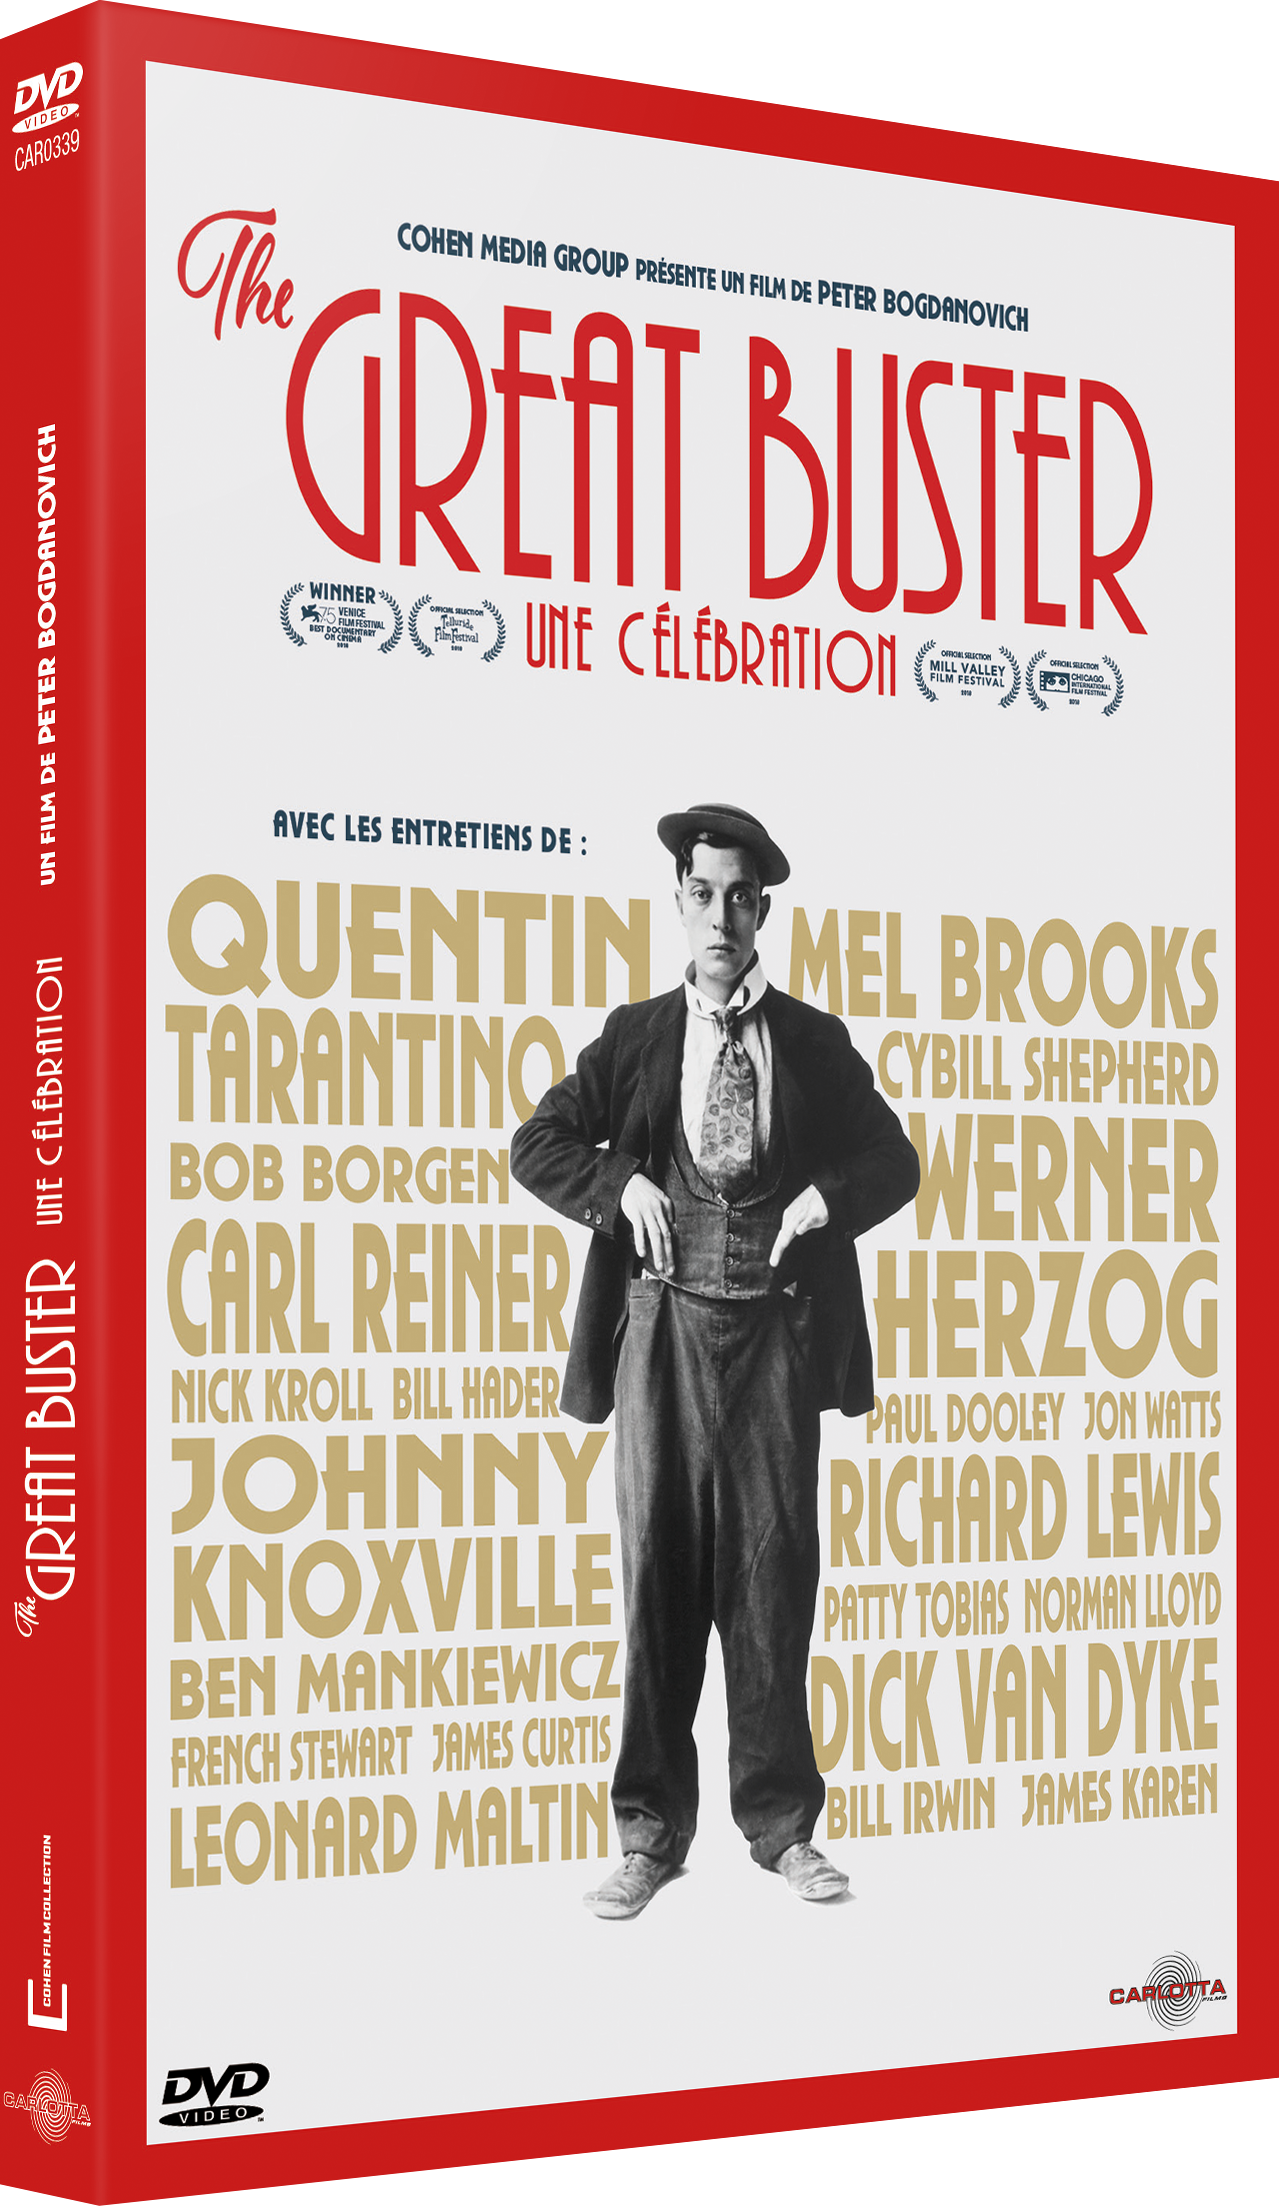 The Great Buster: A Celebration of Peter Bogdanovich – La Boutique